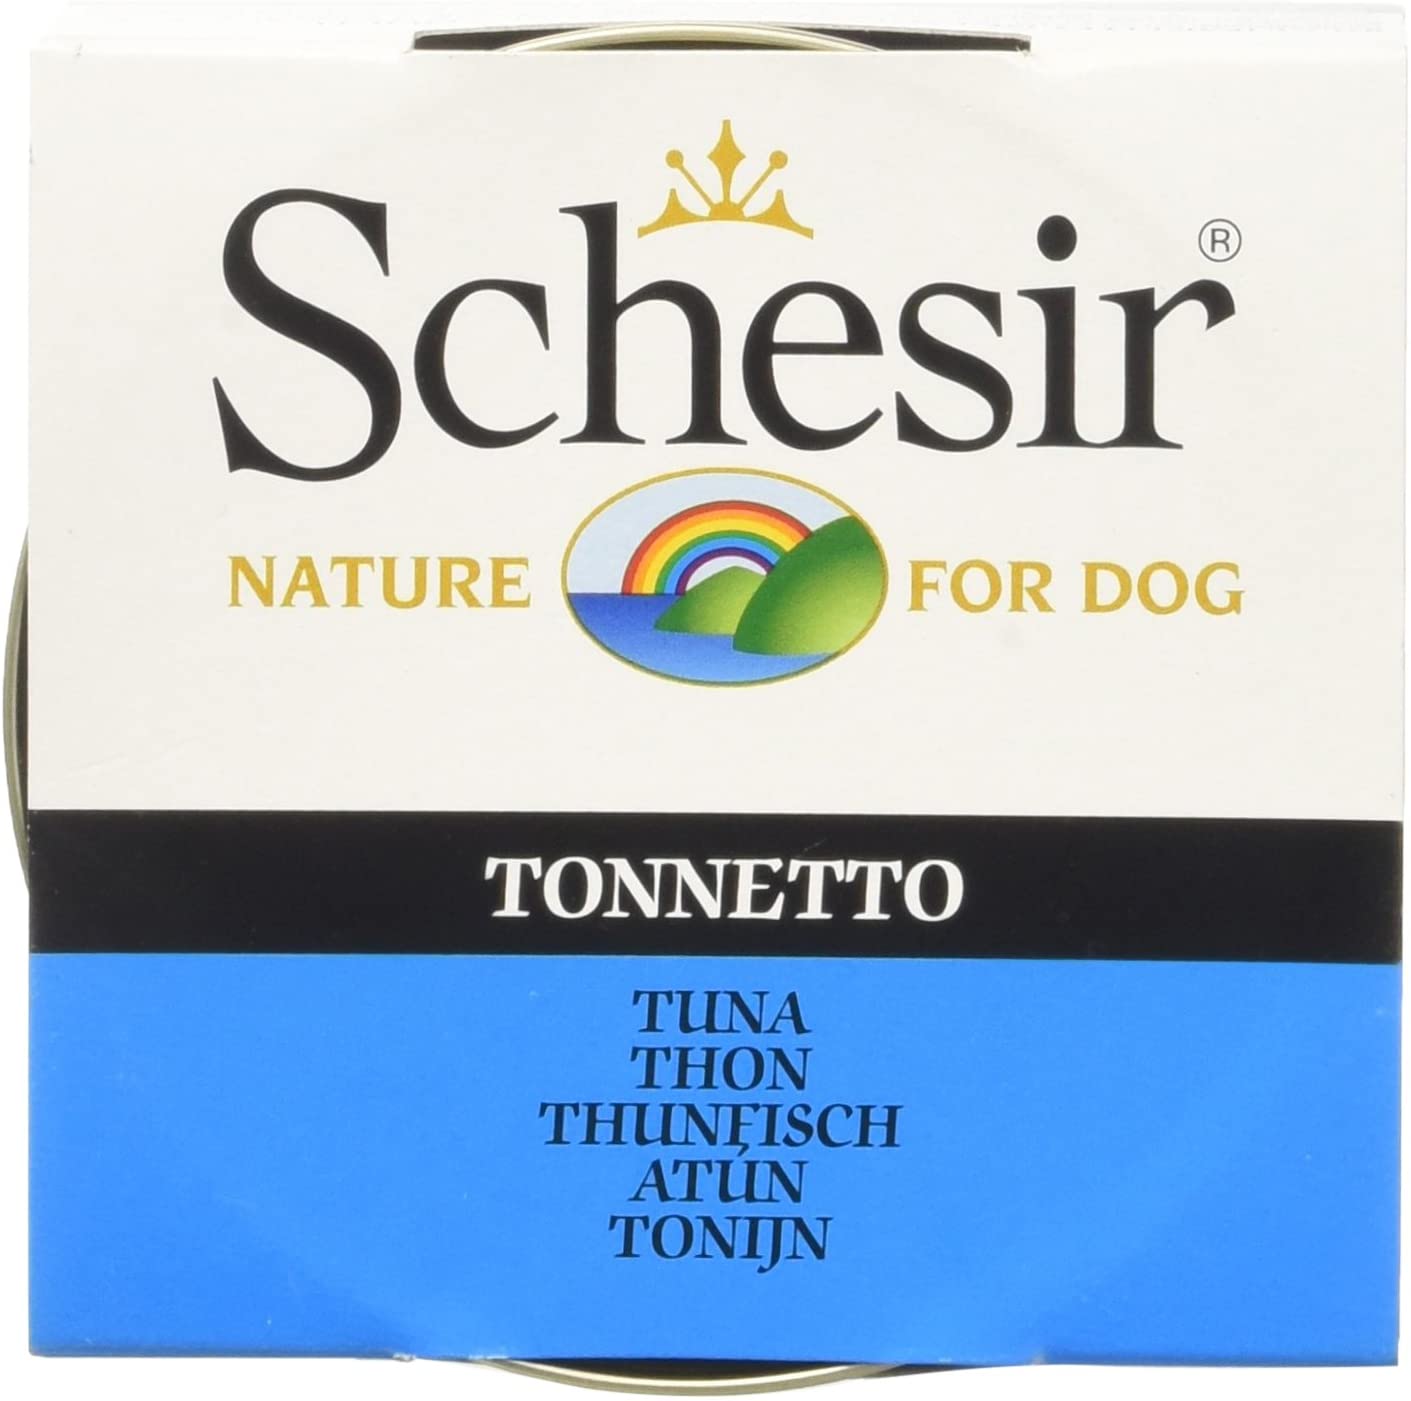  Schesir agr. as delic – sches.Dog to/OR 150 gr. 